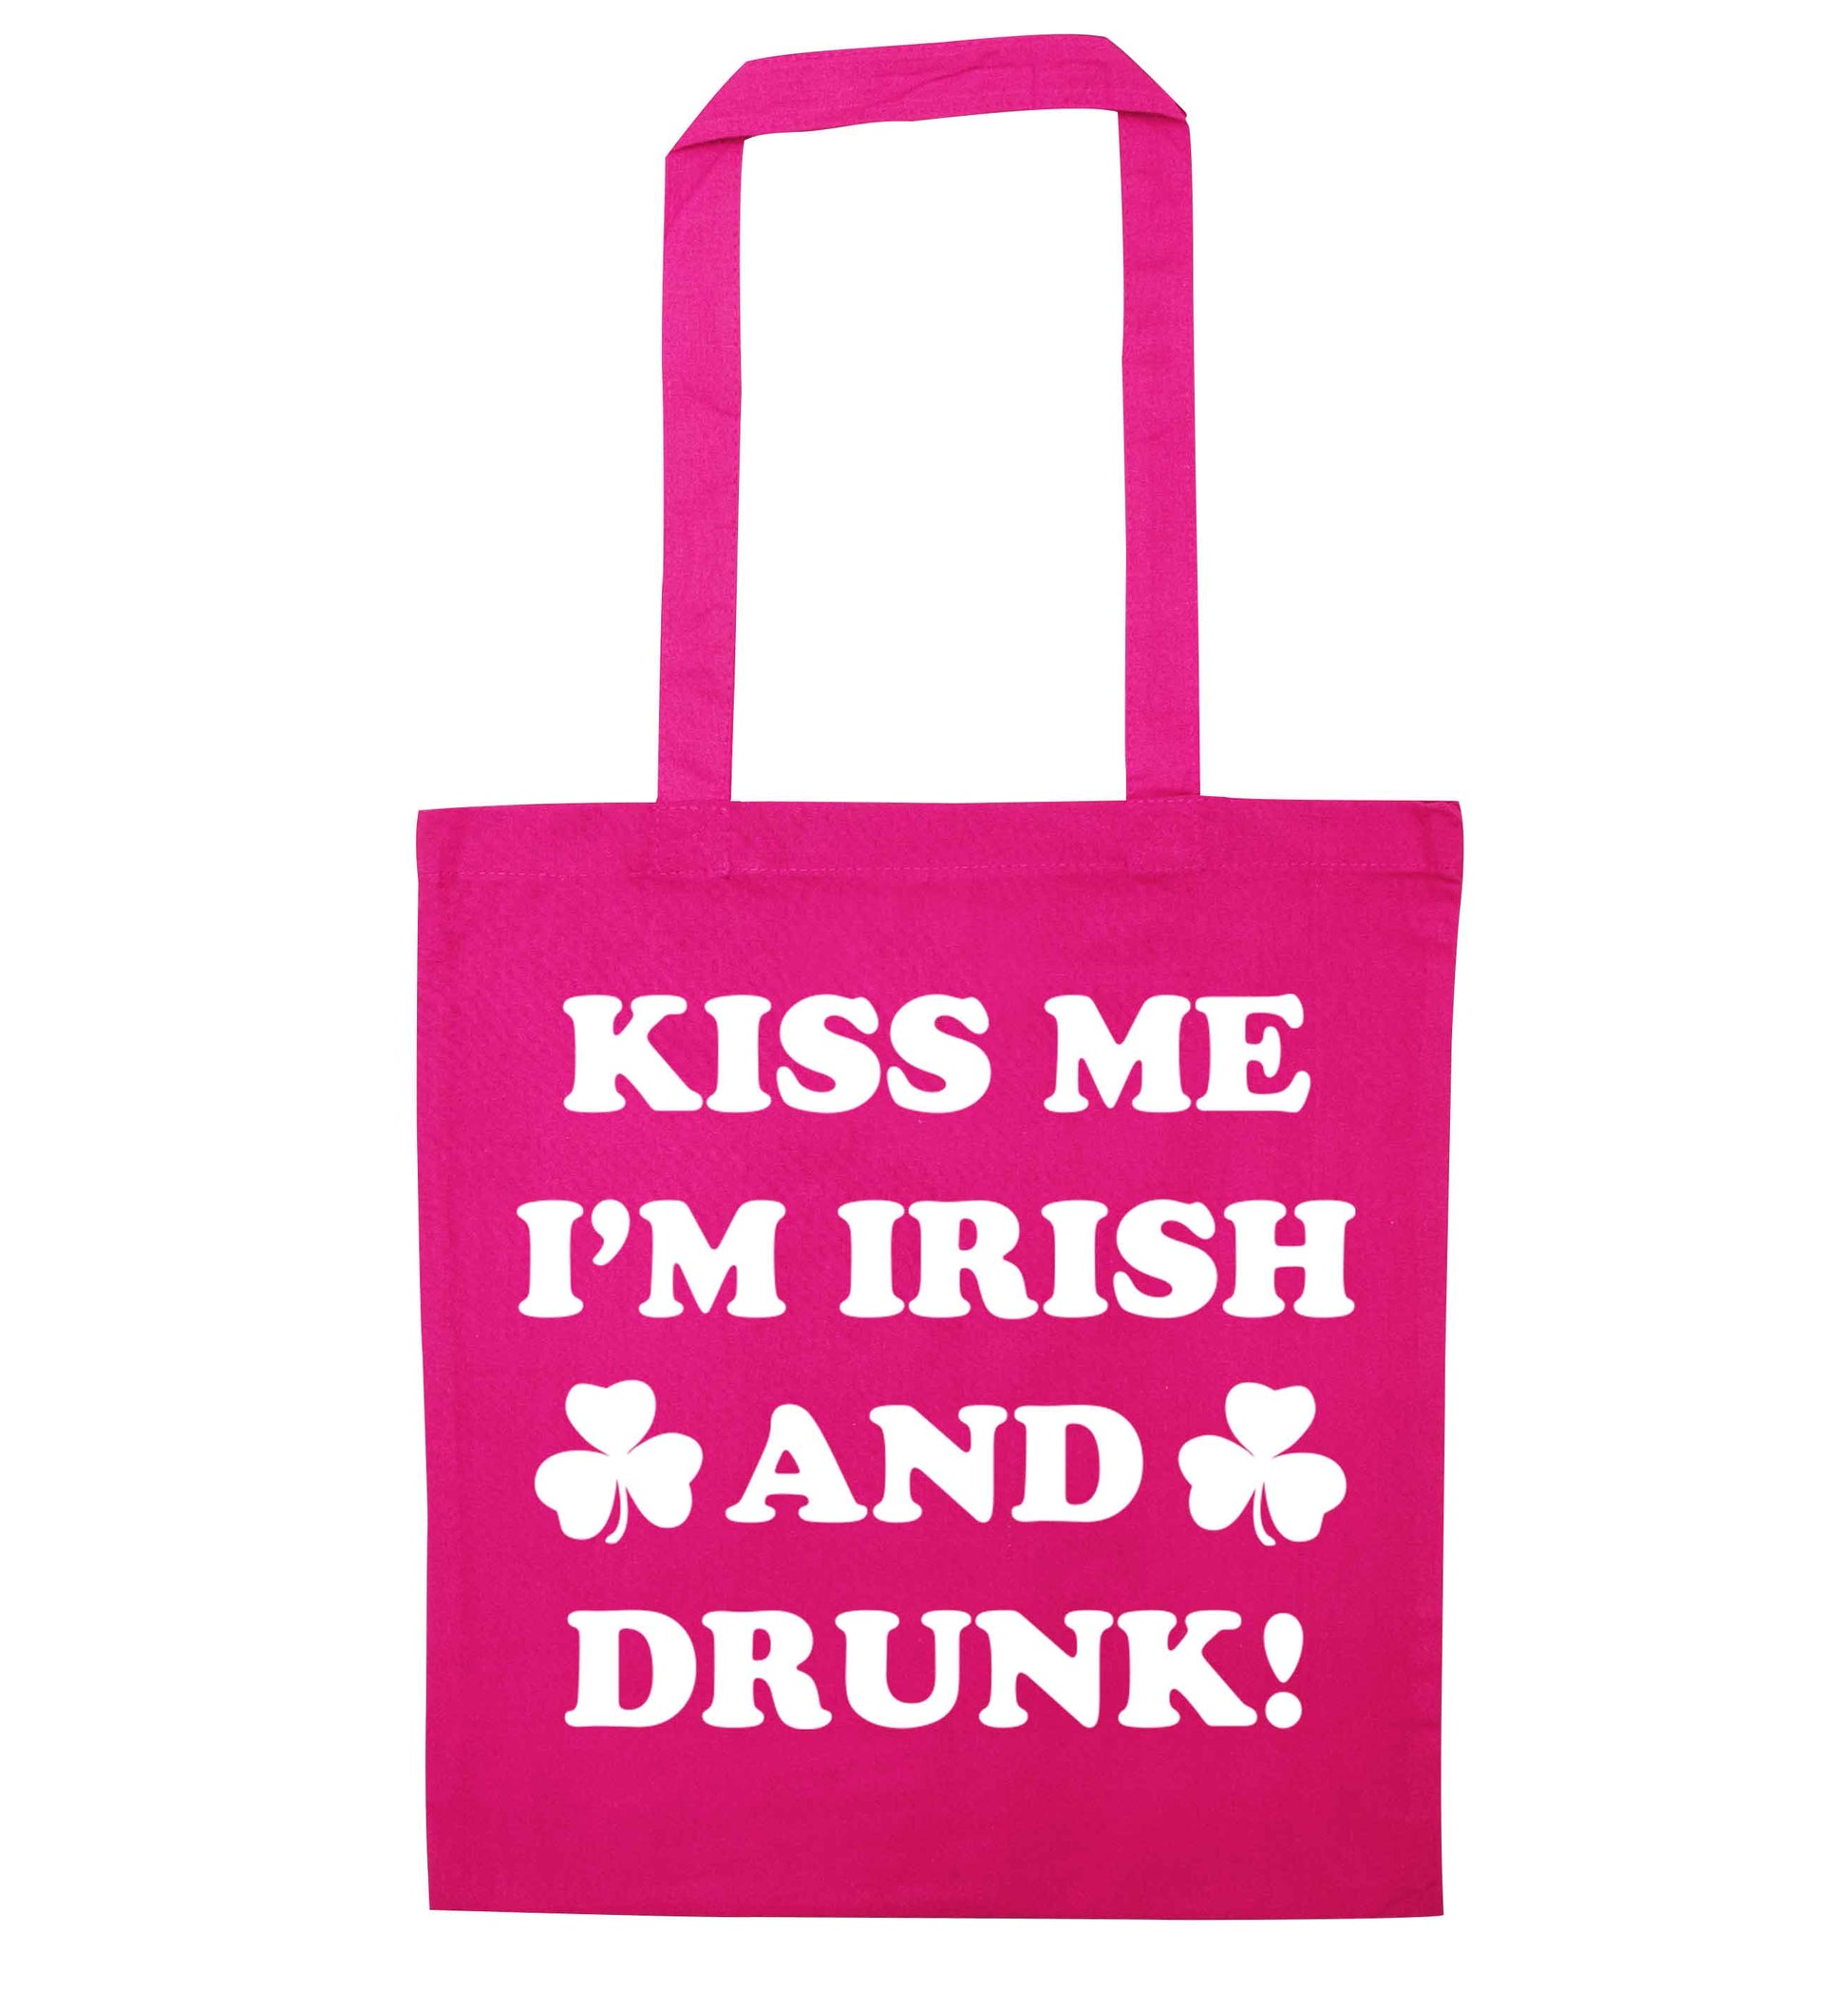 Kiss me I'm Irish and drunk pink tote bag